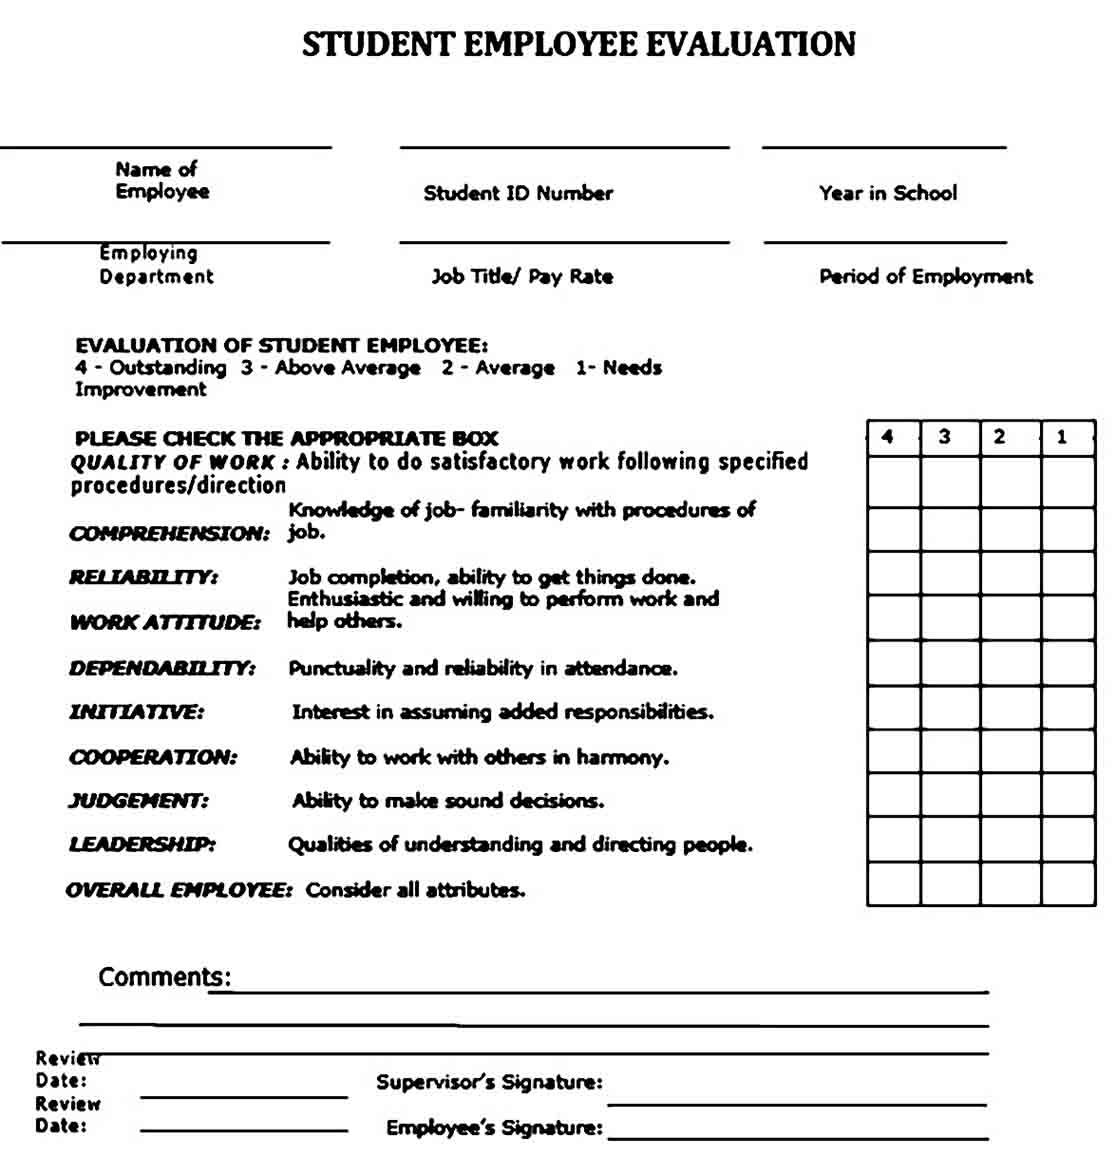 employee evaluation form 1 1